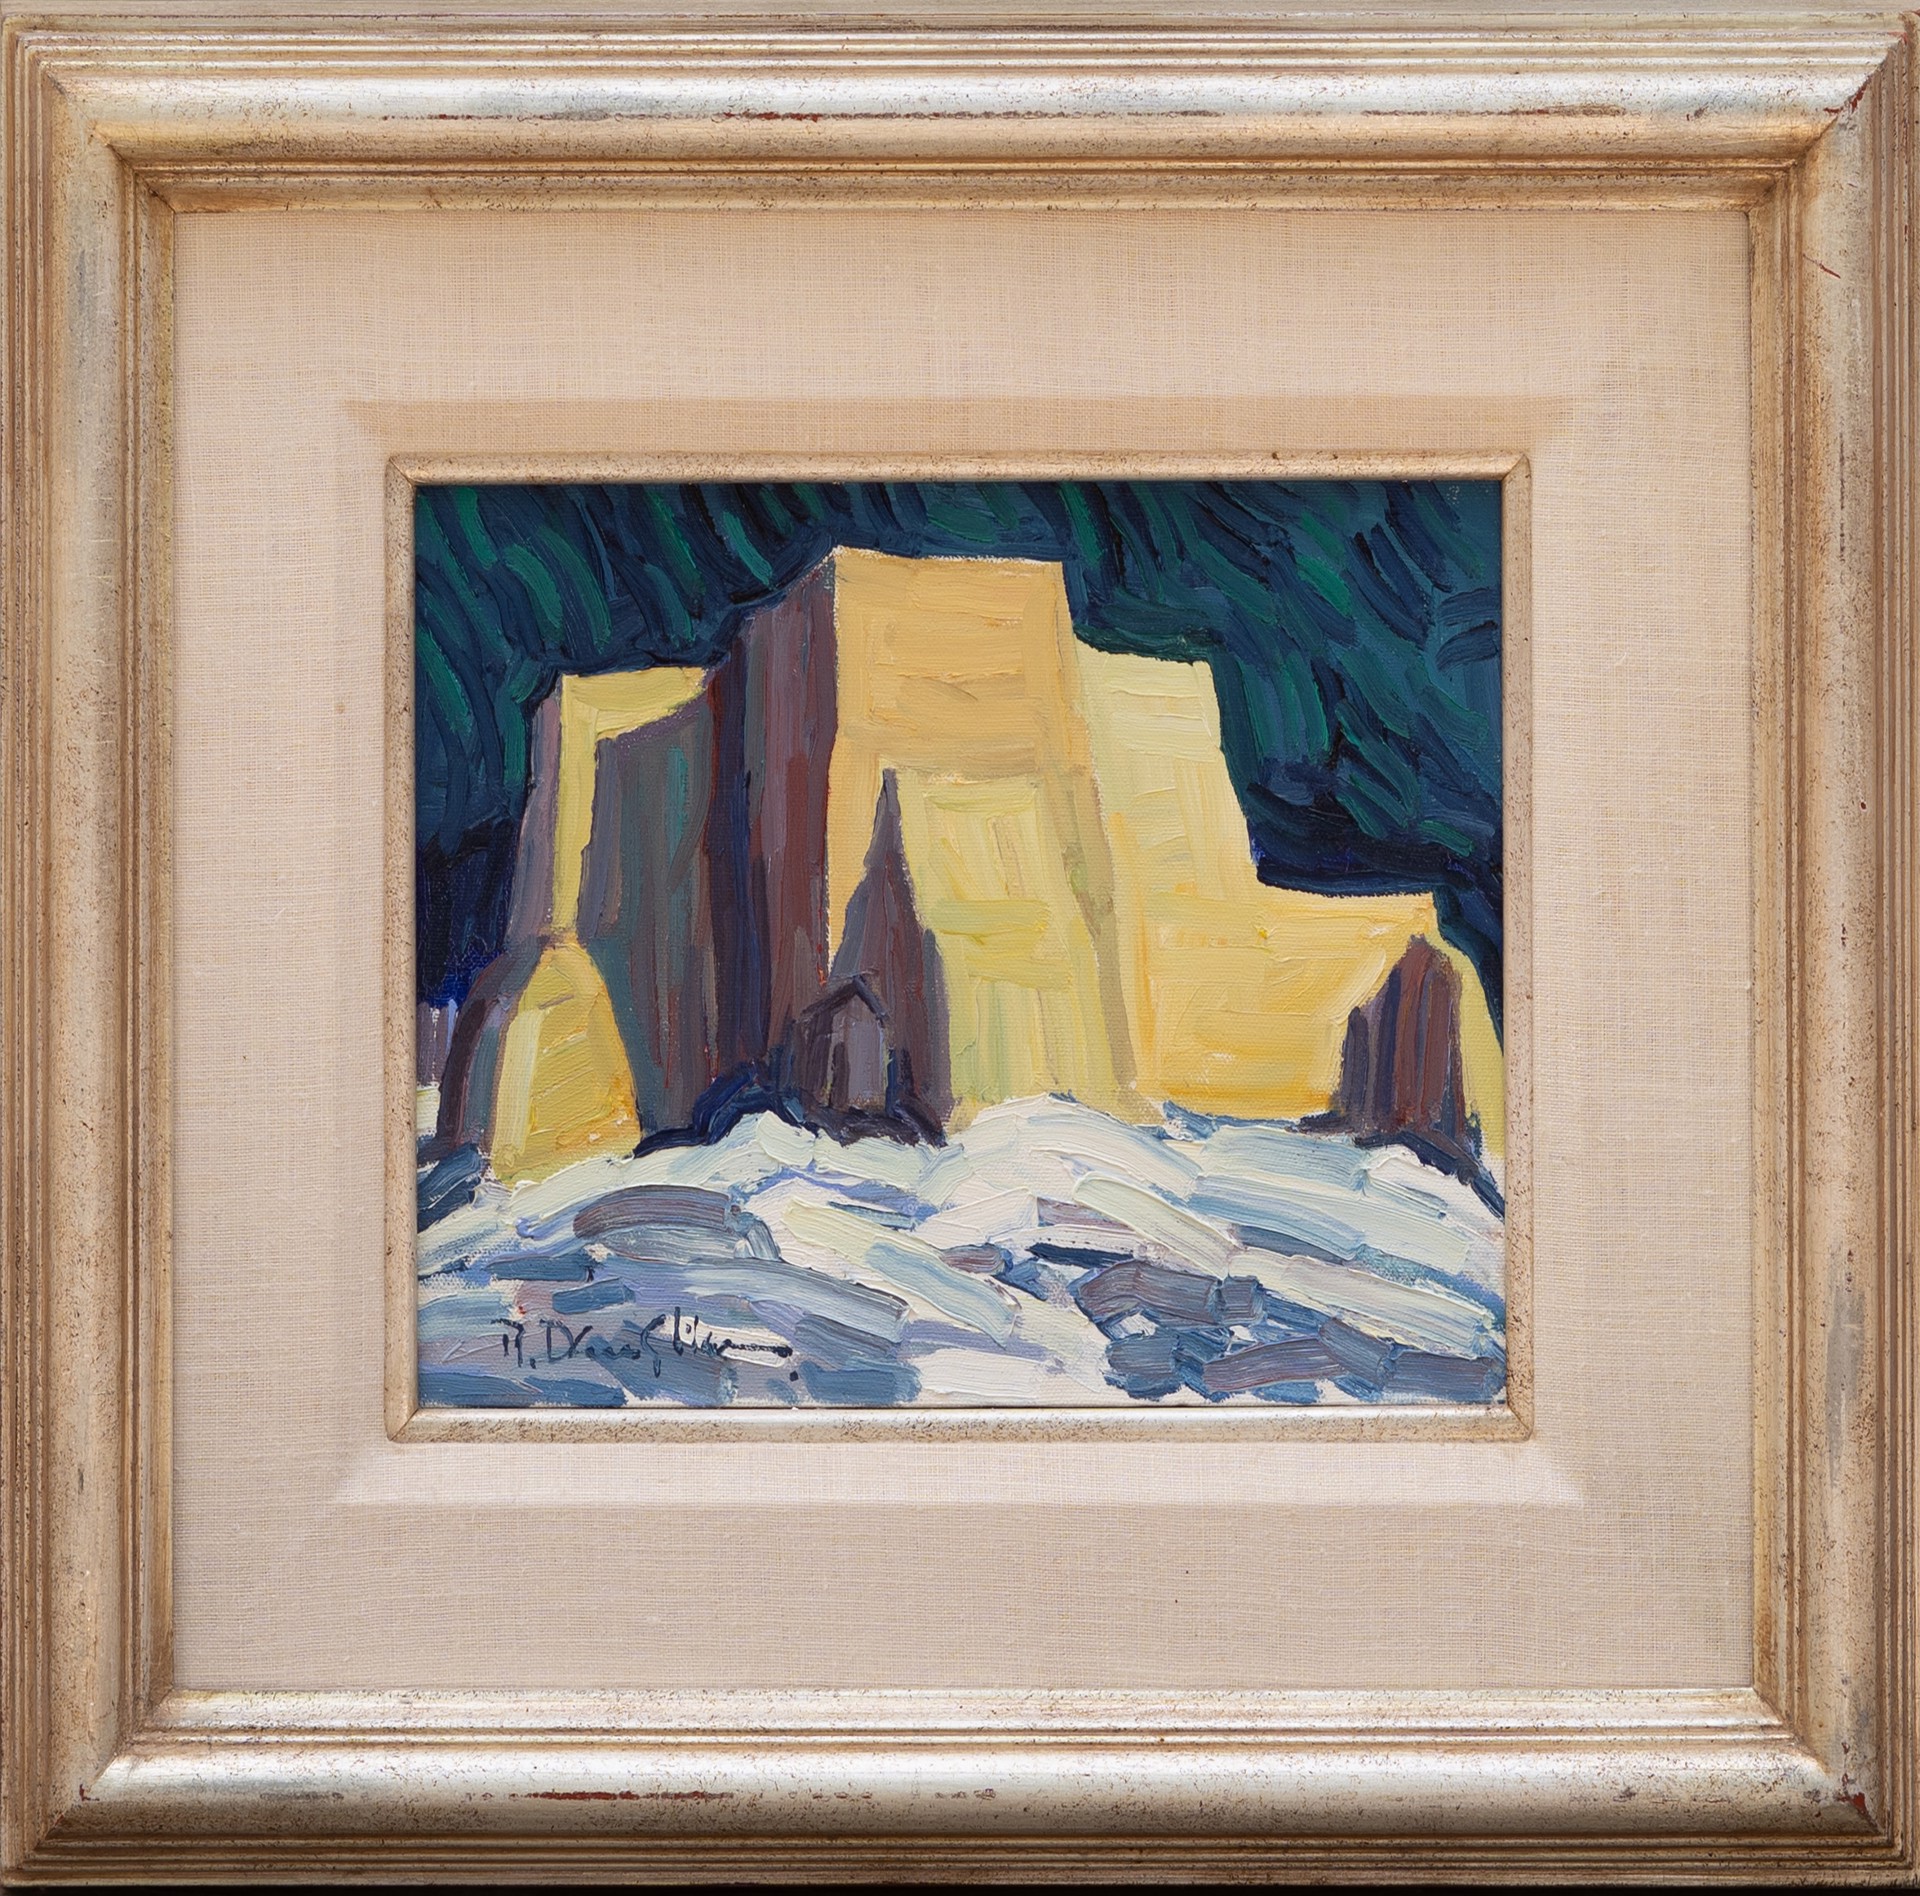 Night Snow by Robert Daughters (1929-2013)